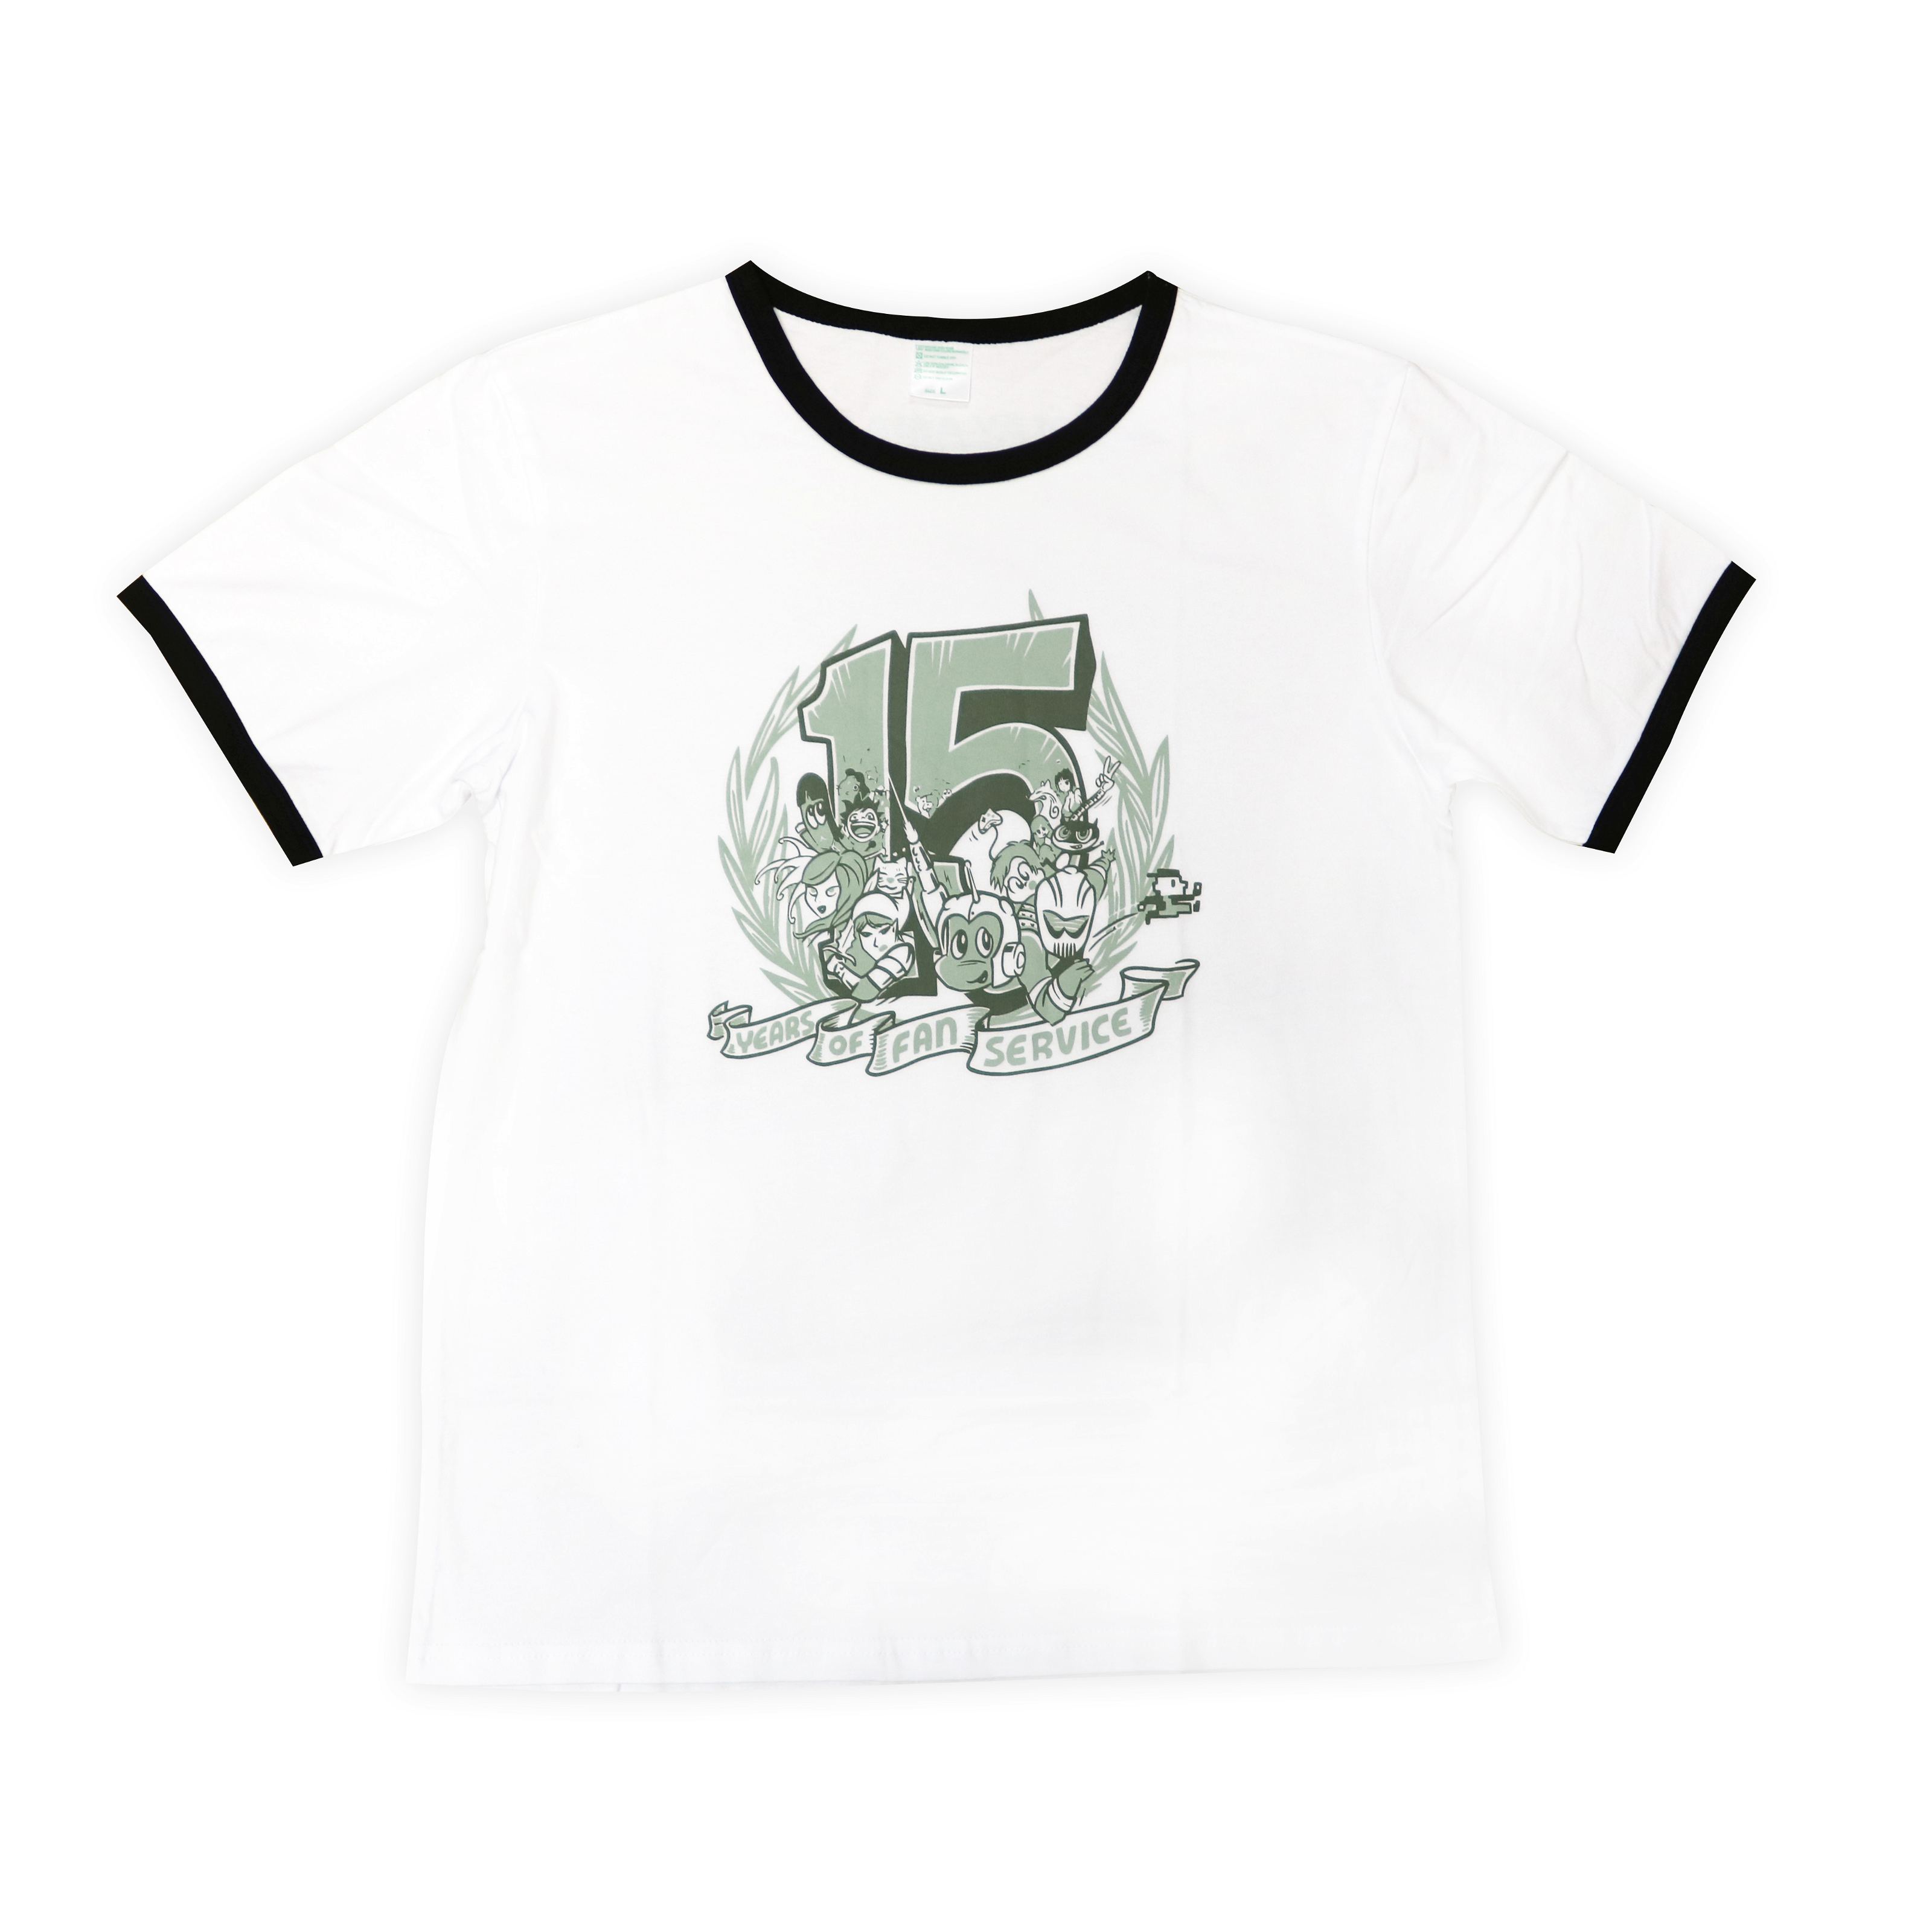 Play-Asia.com 15th Anniversary Women's T-shirt (L Size) Playasia